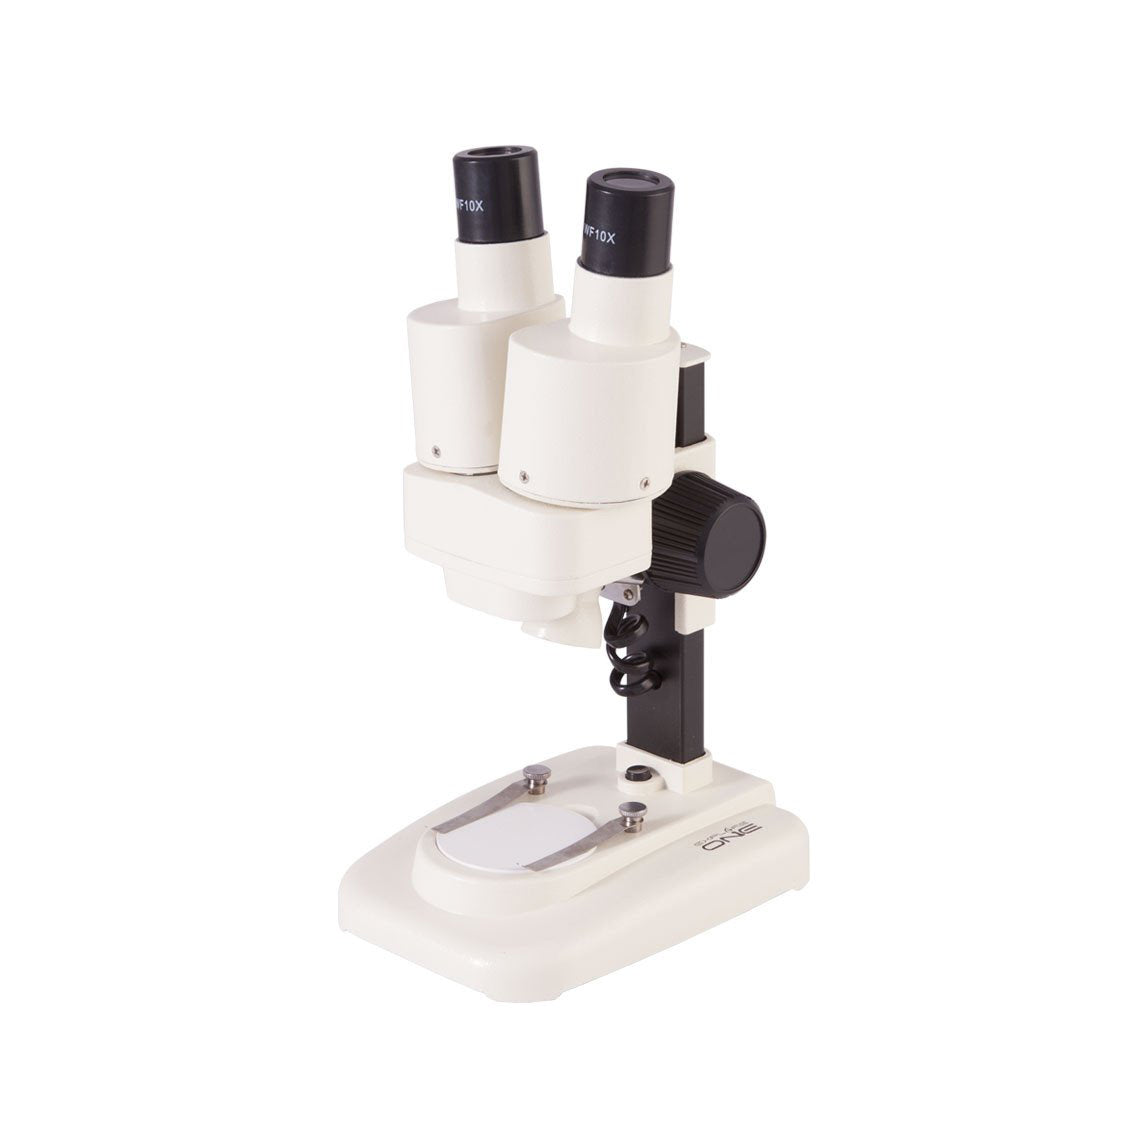 Explore One 20x Stereo Microscope